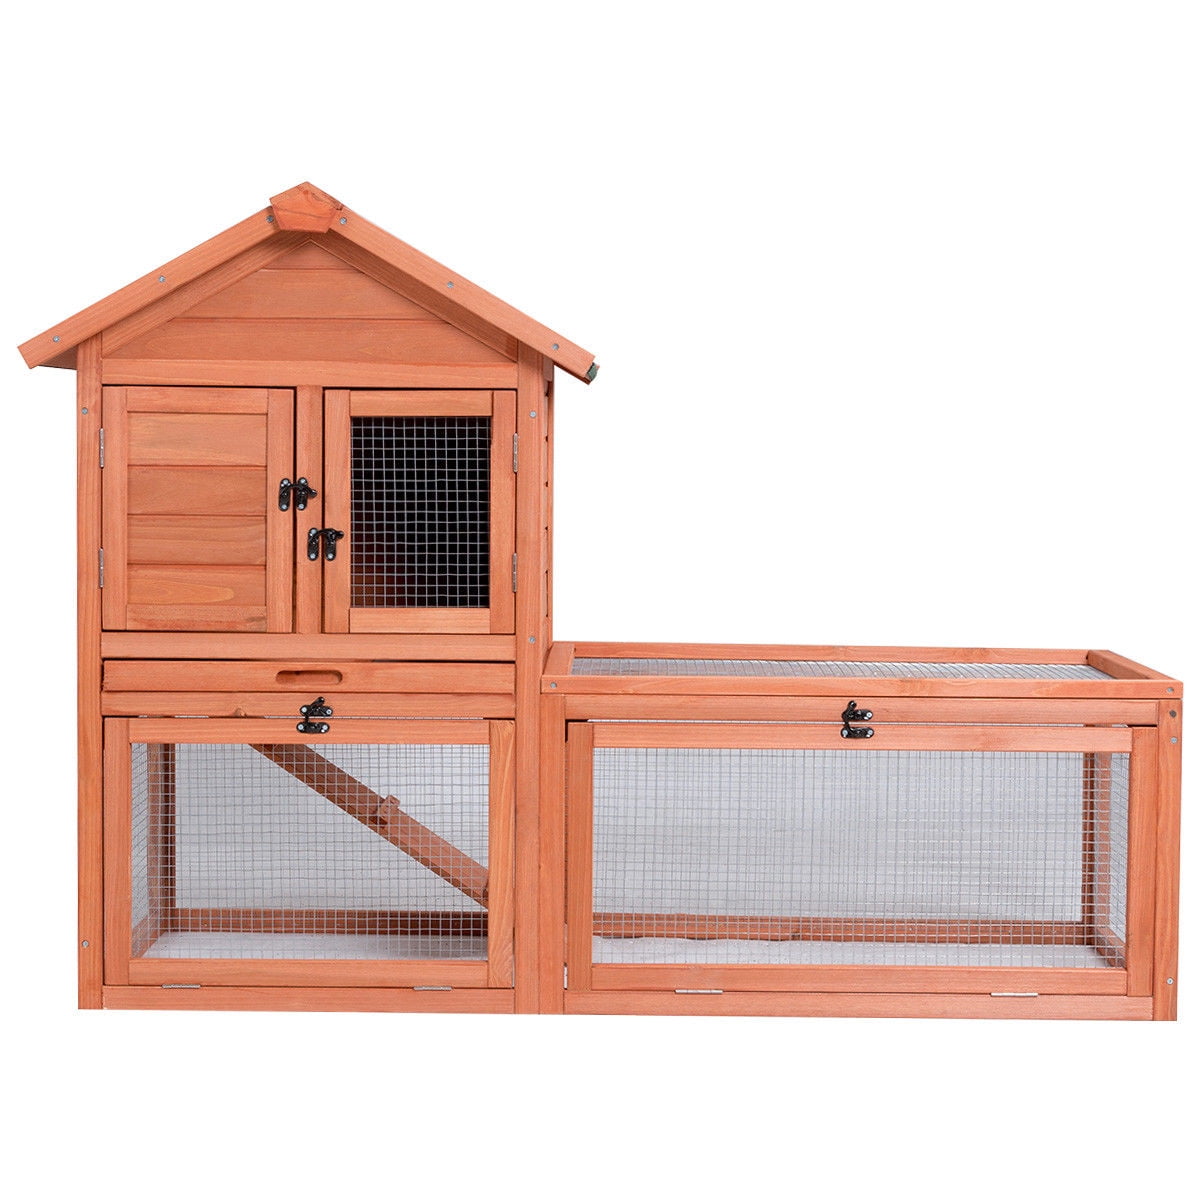 Danxee Rabbit Hutch Chicken Coop Rabbit Bunny Cage Wood Small Animals House for Outdoor Garden Backyard Use